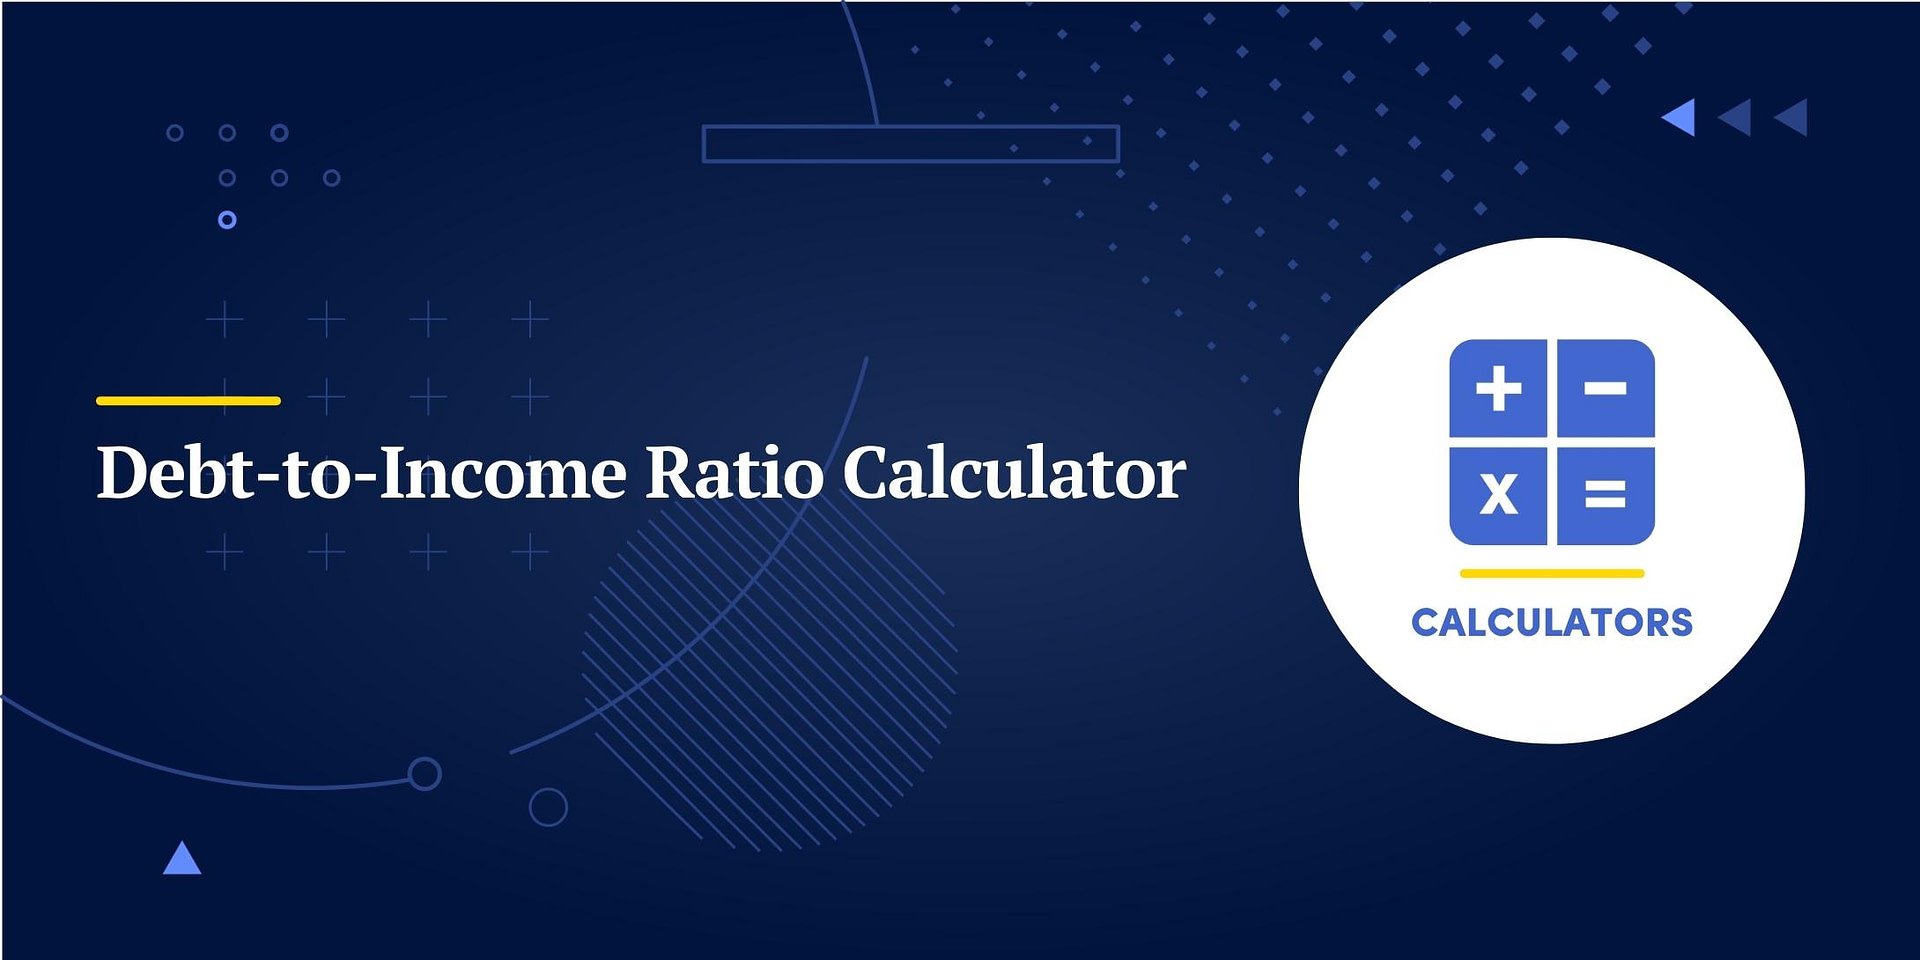 Debt-to-Income Ratio Calculator - Calculate Your DTI